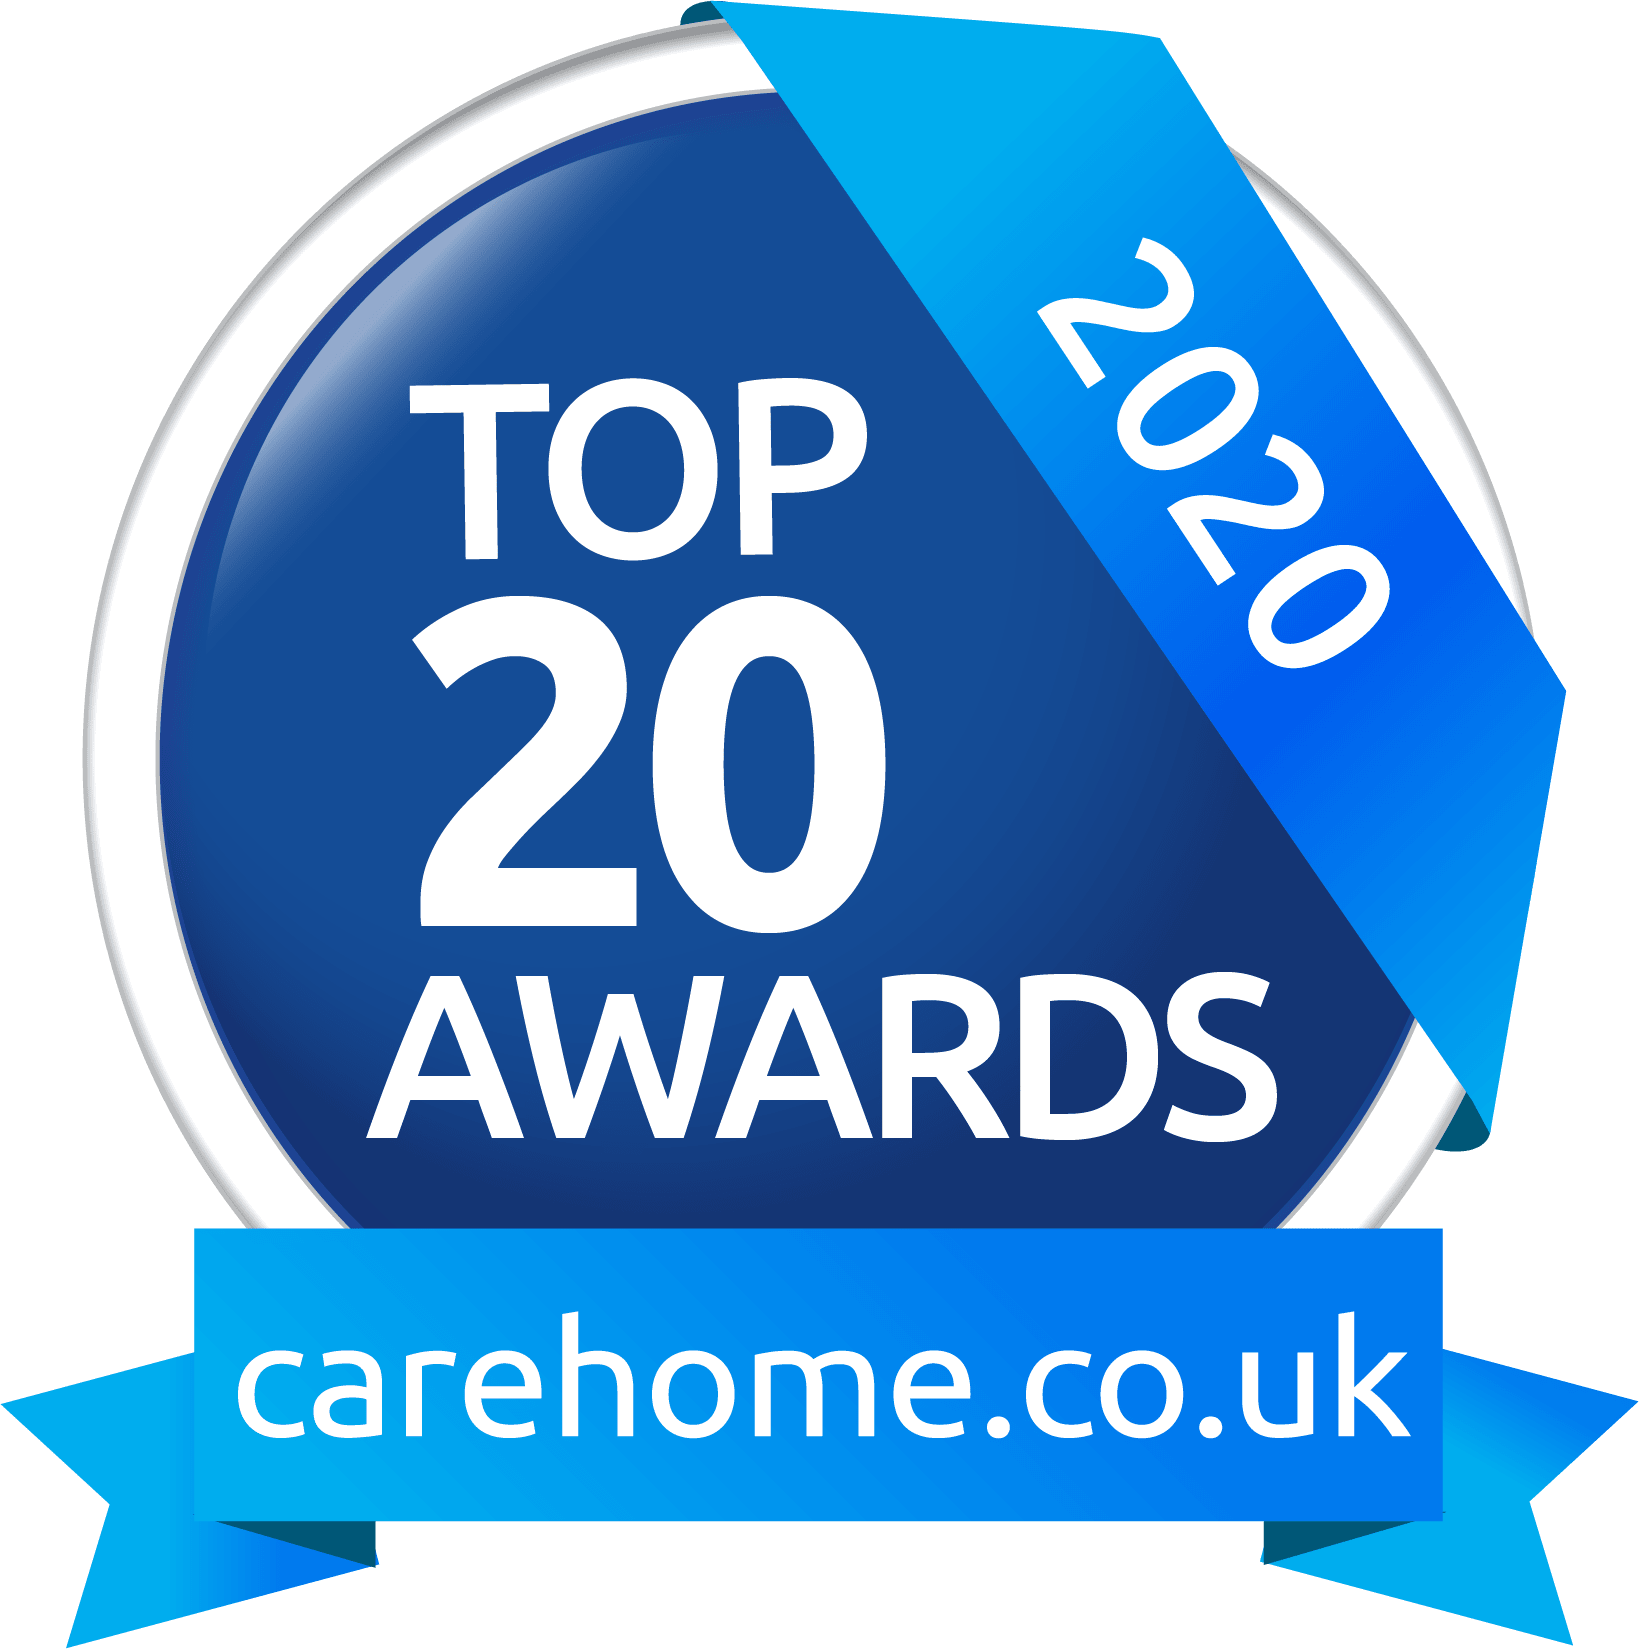 carehome.co.uk 2020 - Top 20 Awards